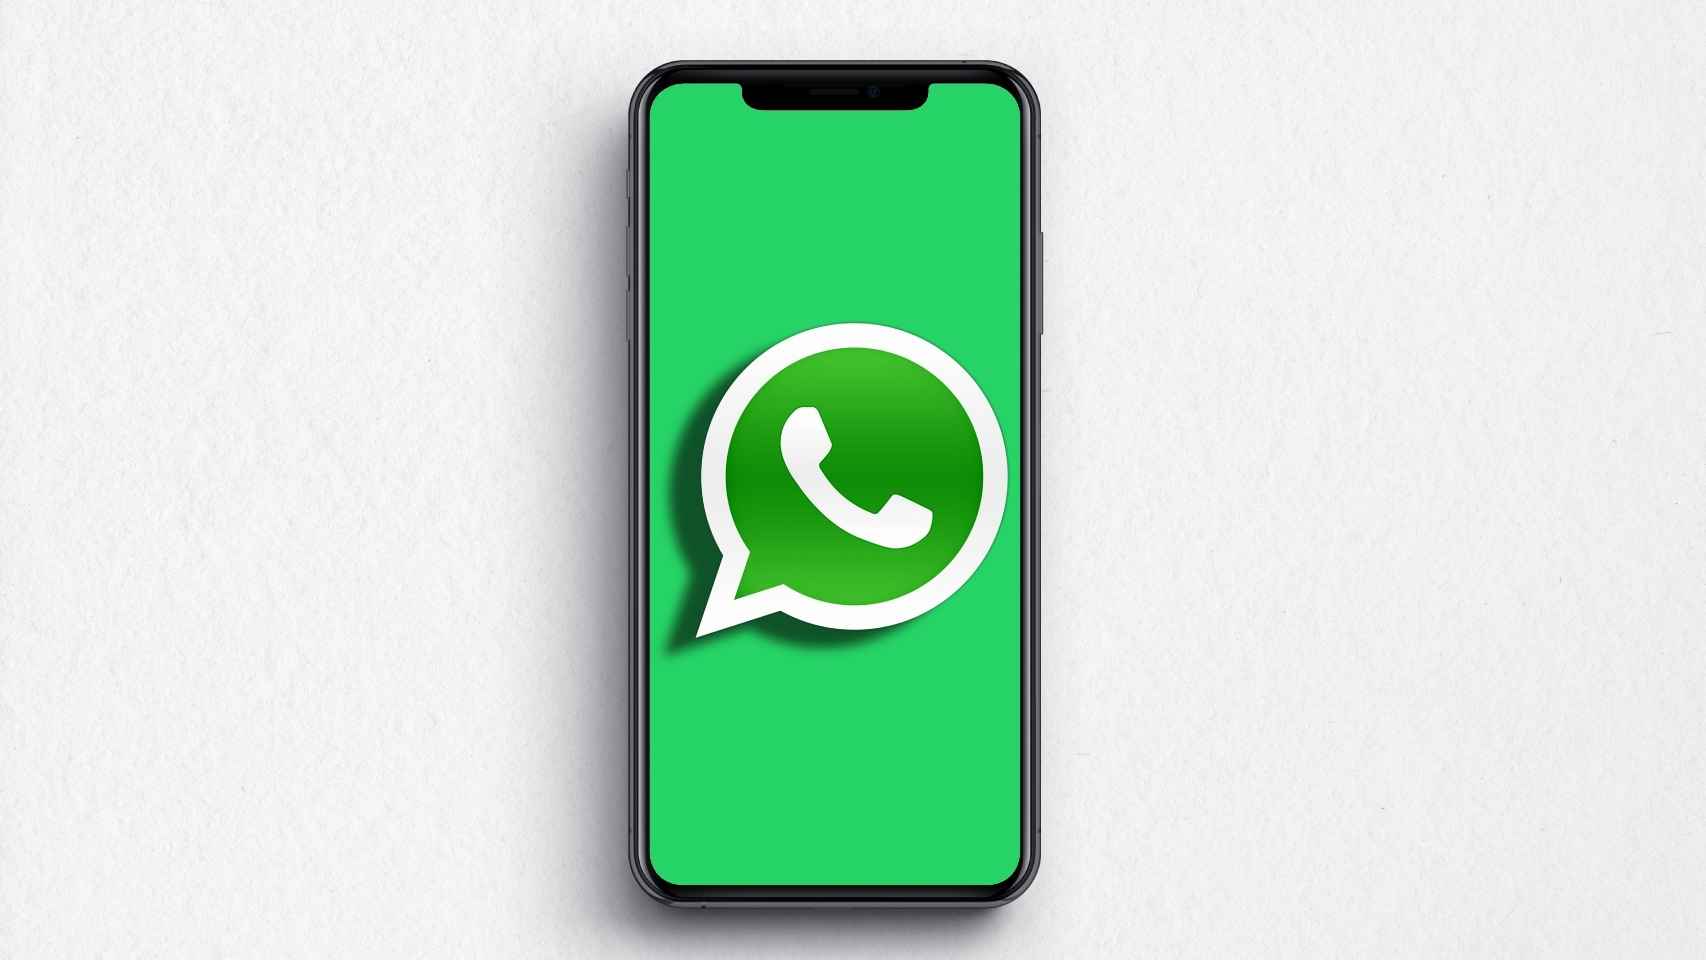 WhatsApp en un móvil